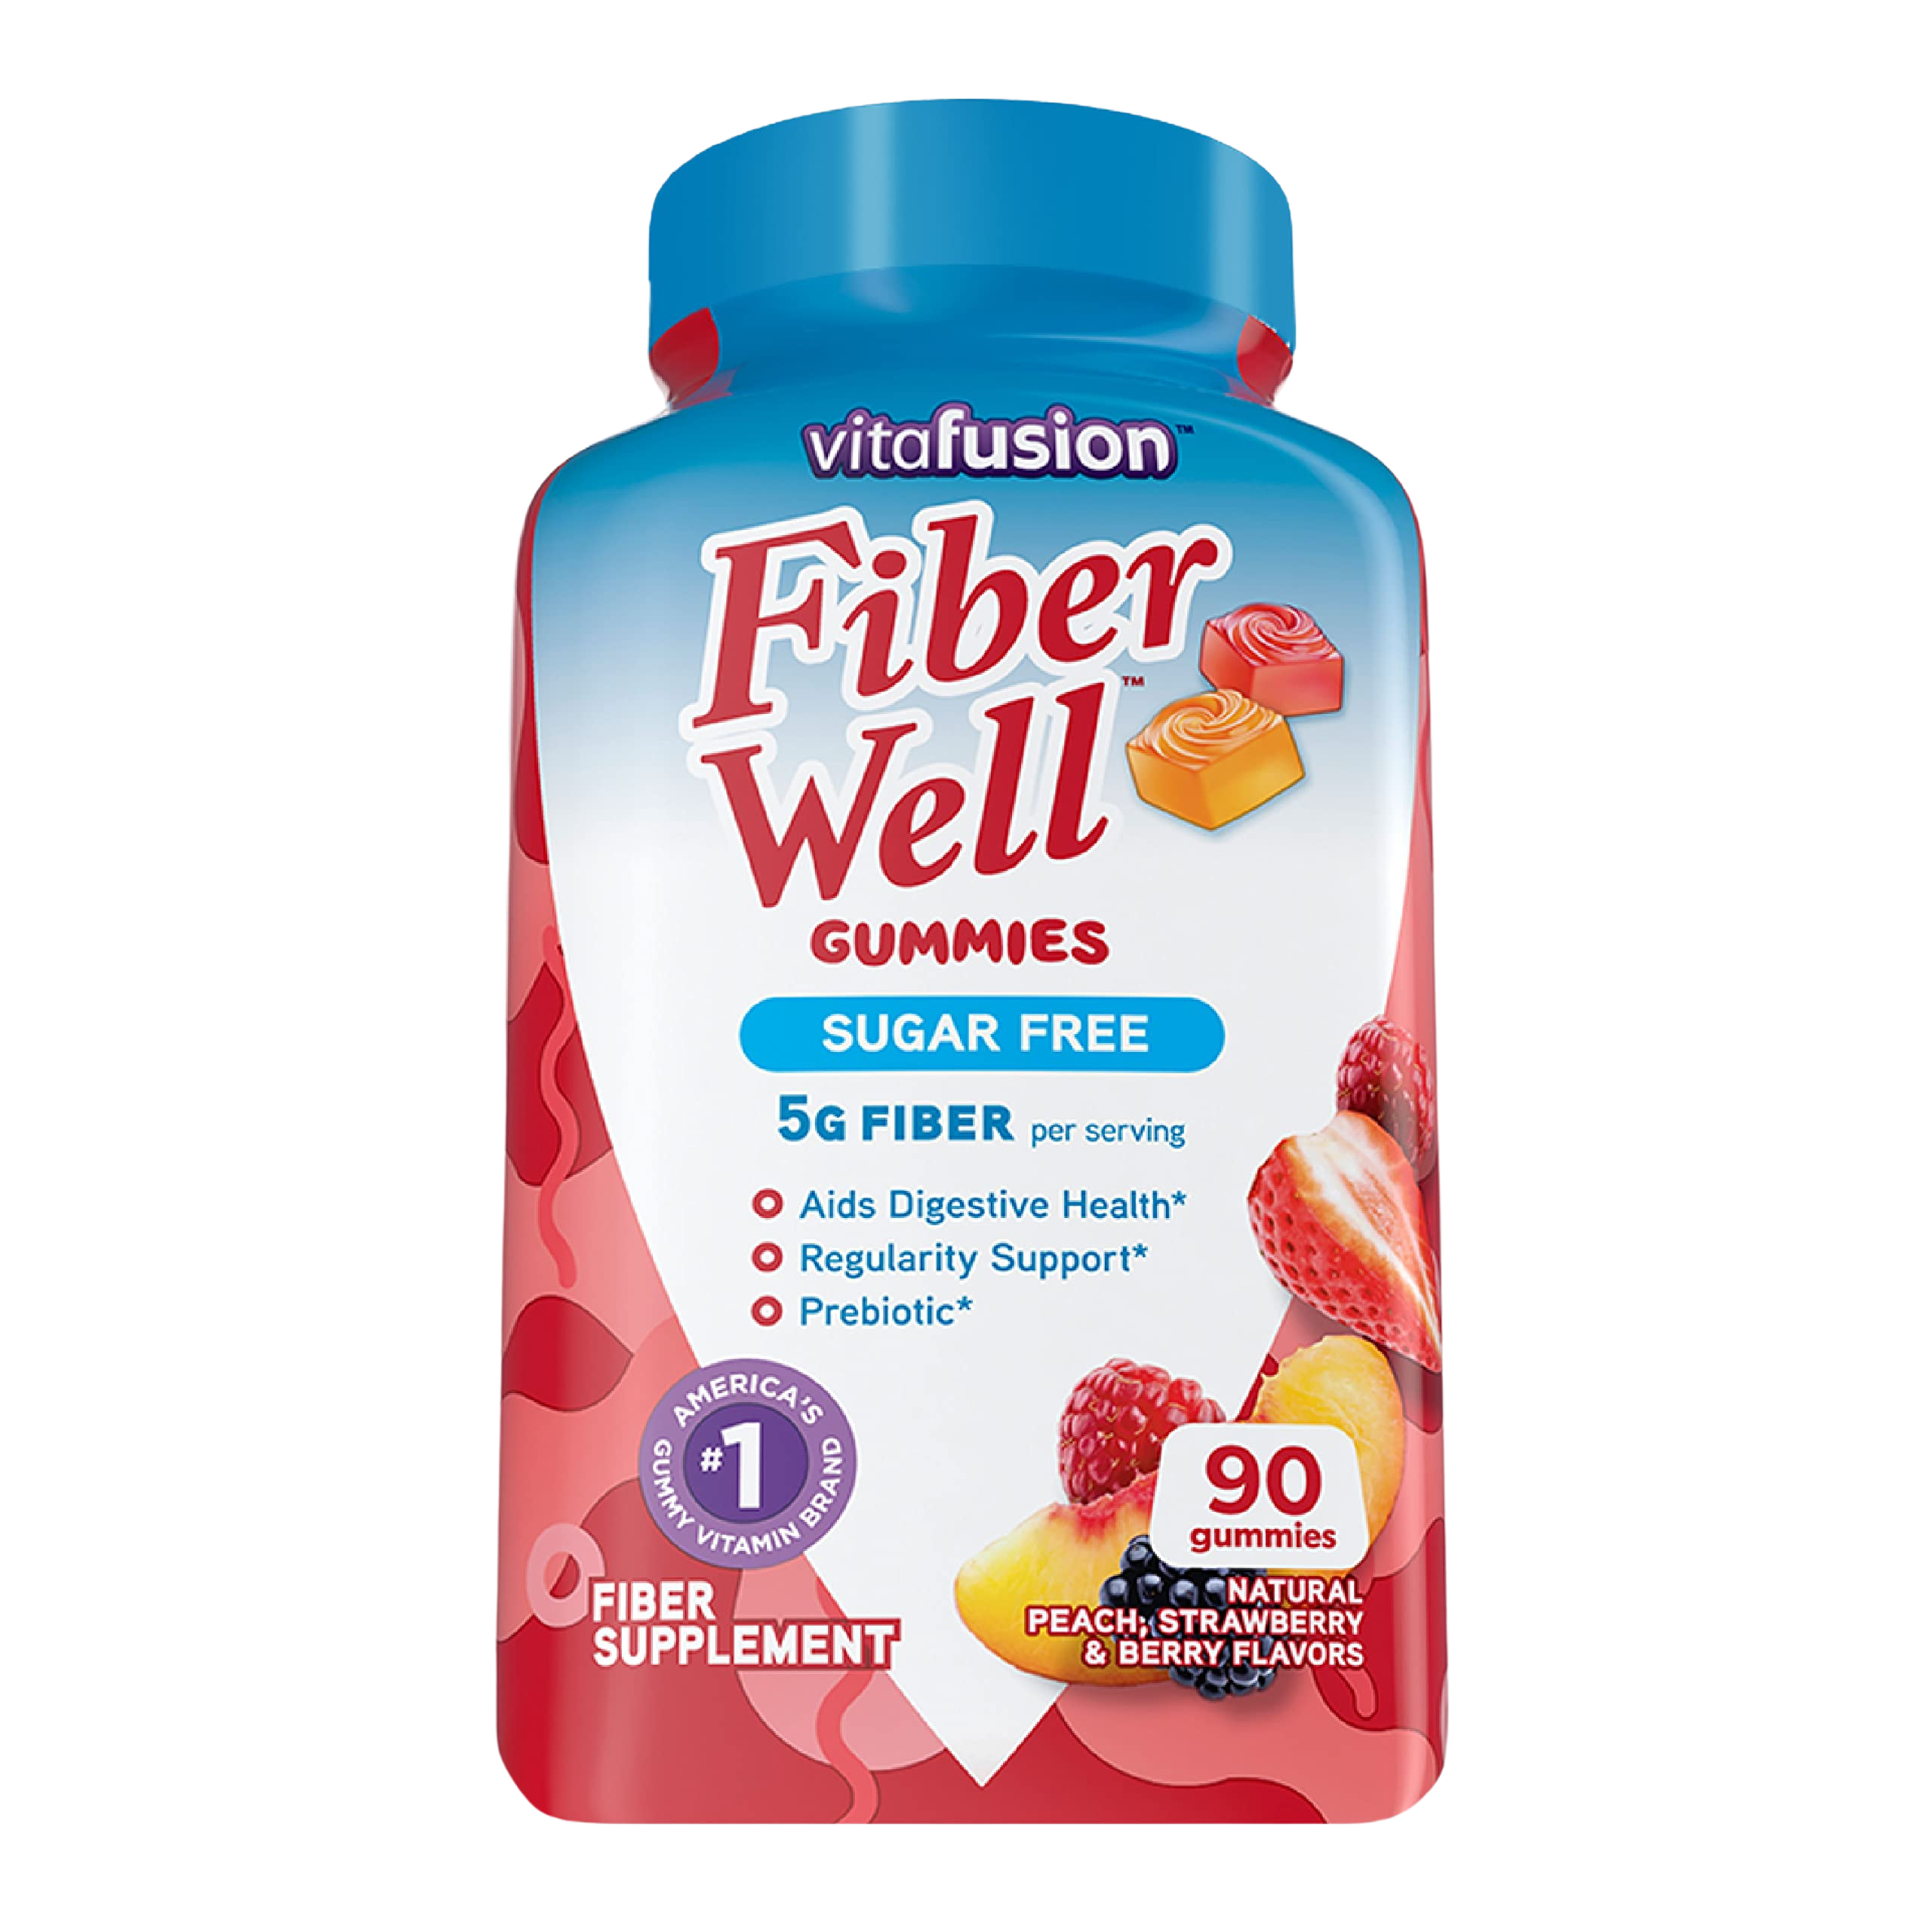 Vitafusion Fiber Well Sugar-Free Fiber Supplement, Peach, Strawberry And Blackberry Flavored Supplements